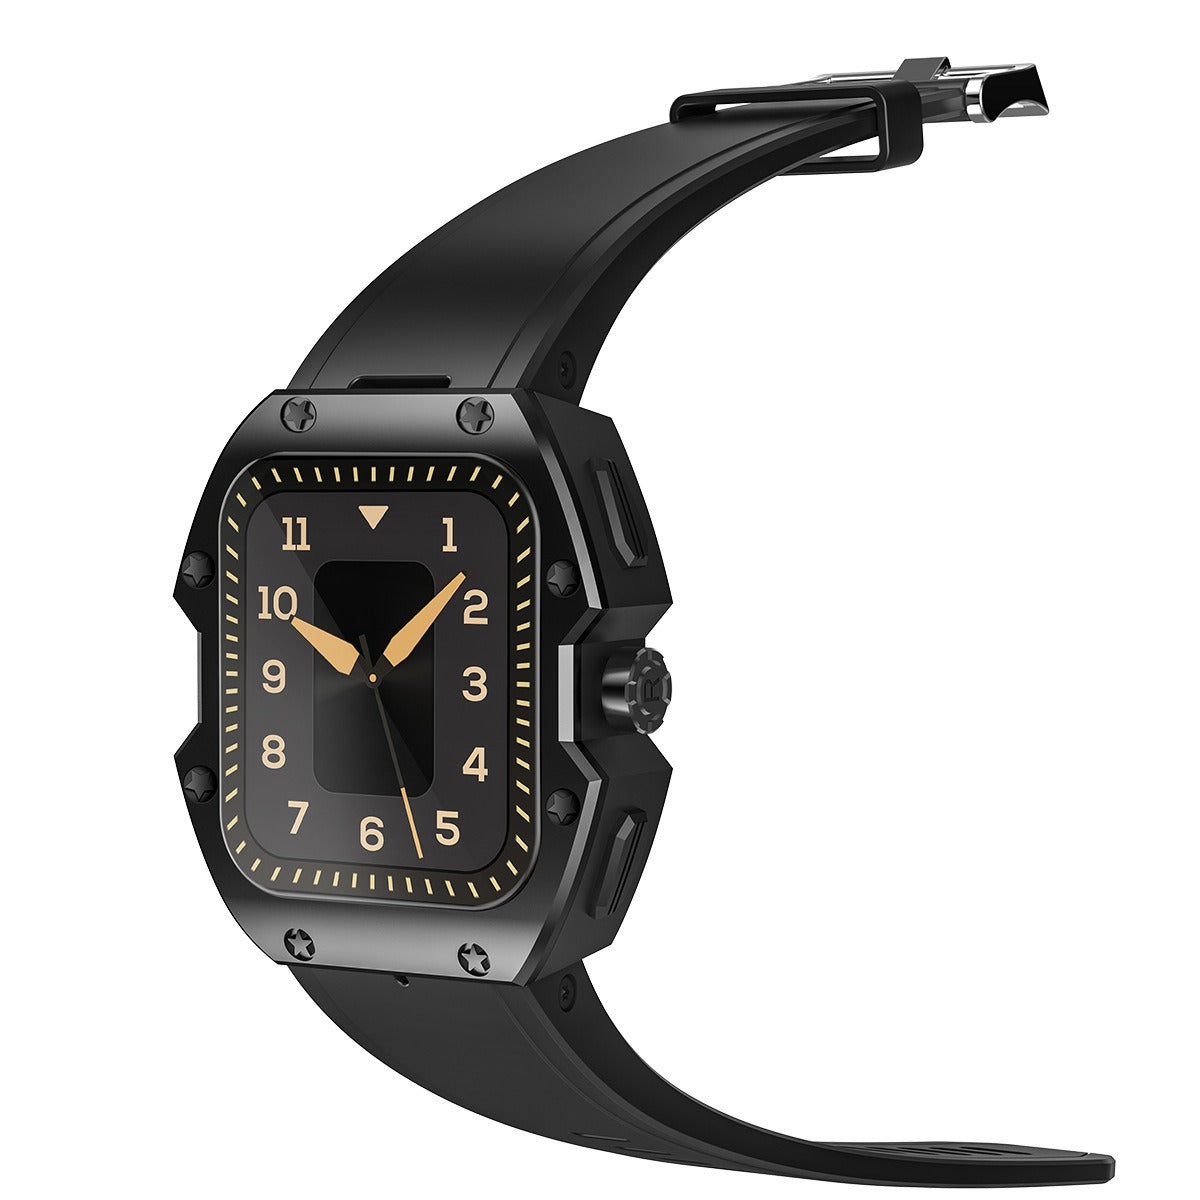 Rugged sports smart watch 1.91 inch 520mAH multi-scene sports mode 5ATM